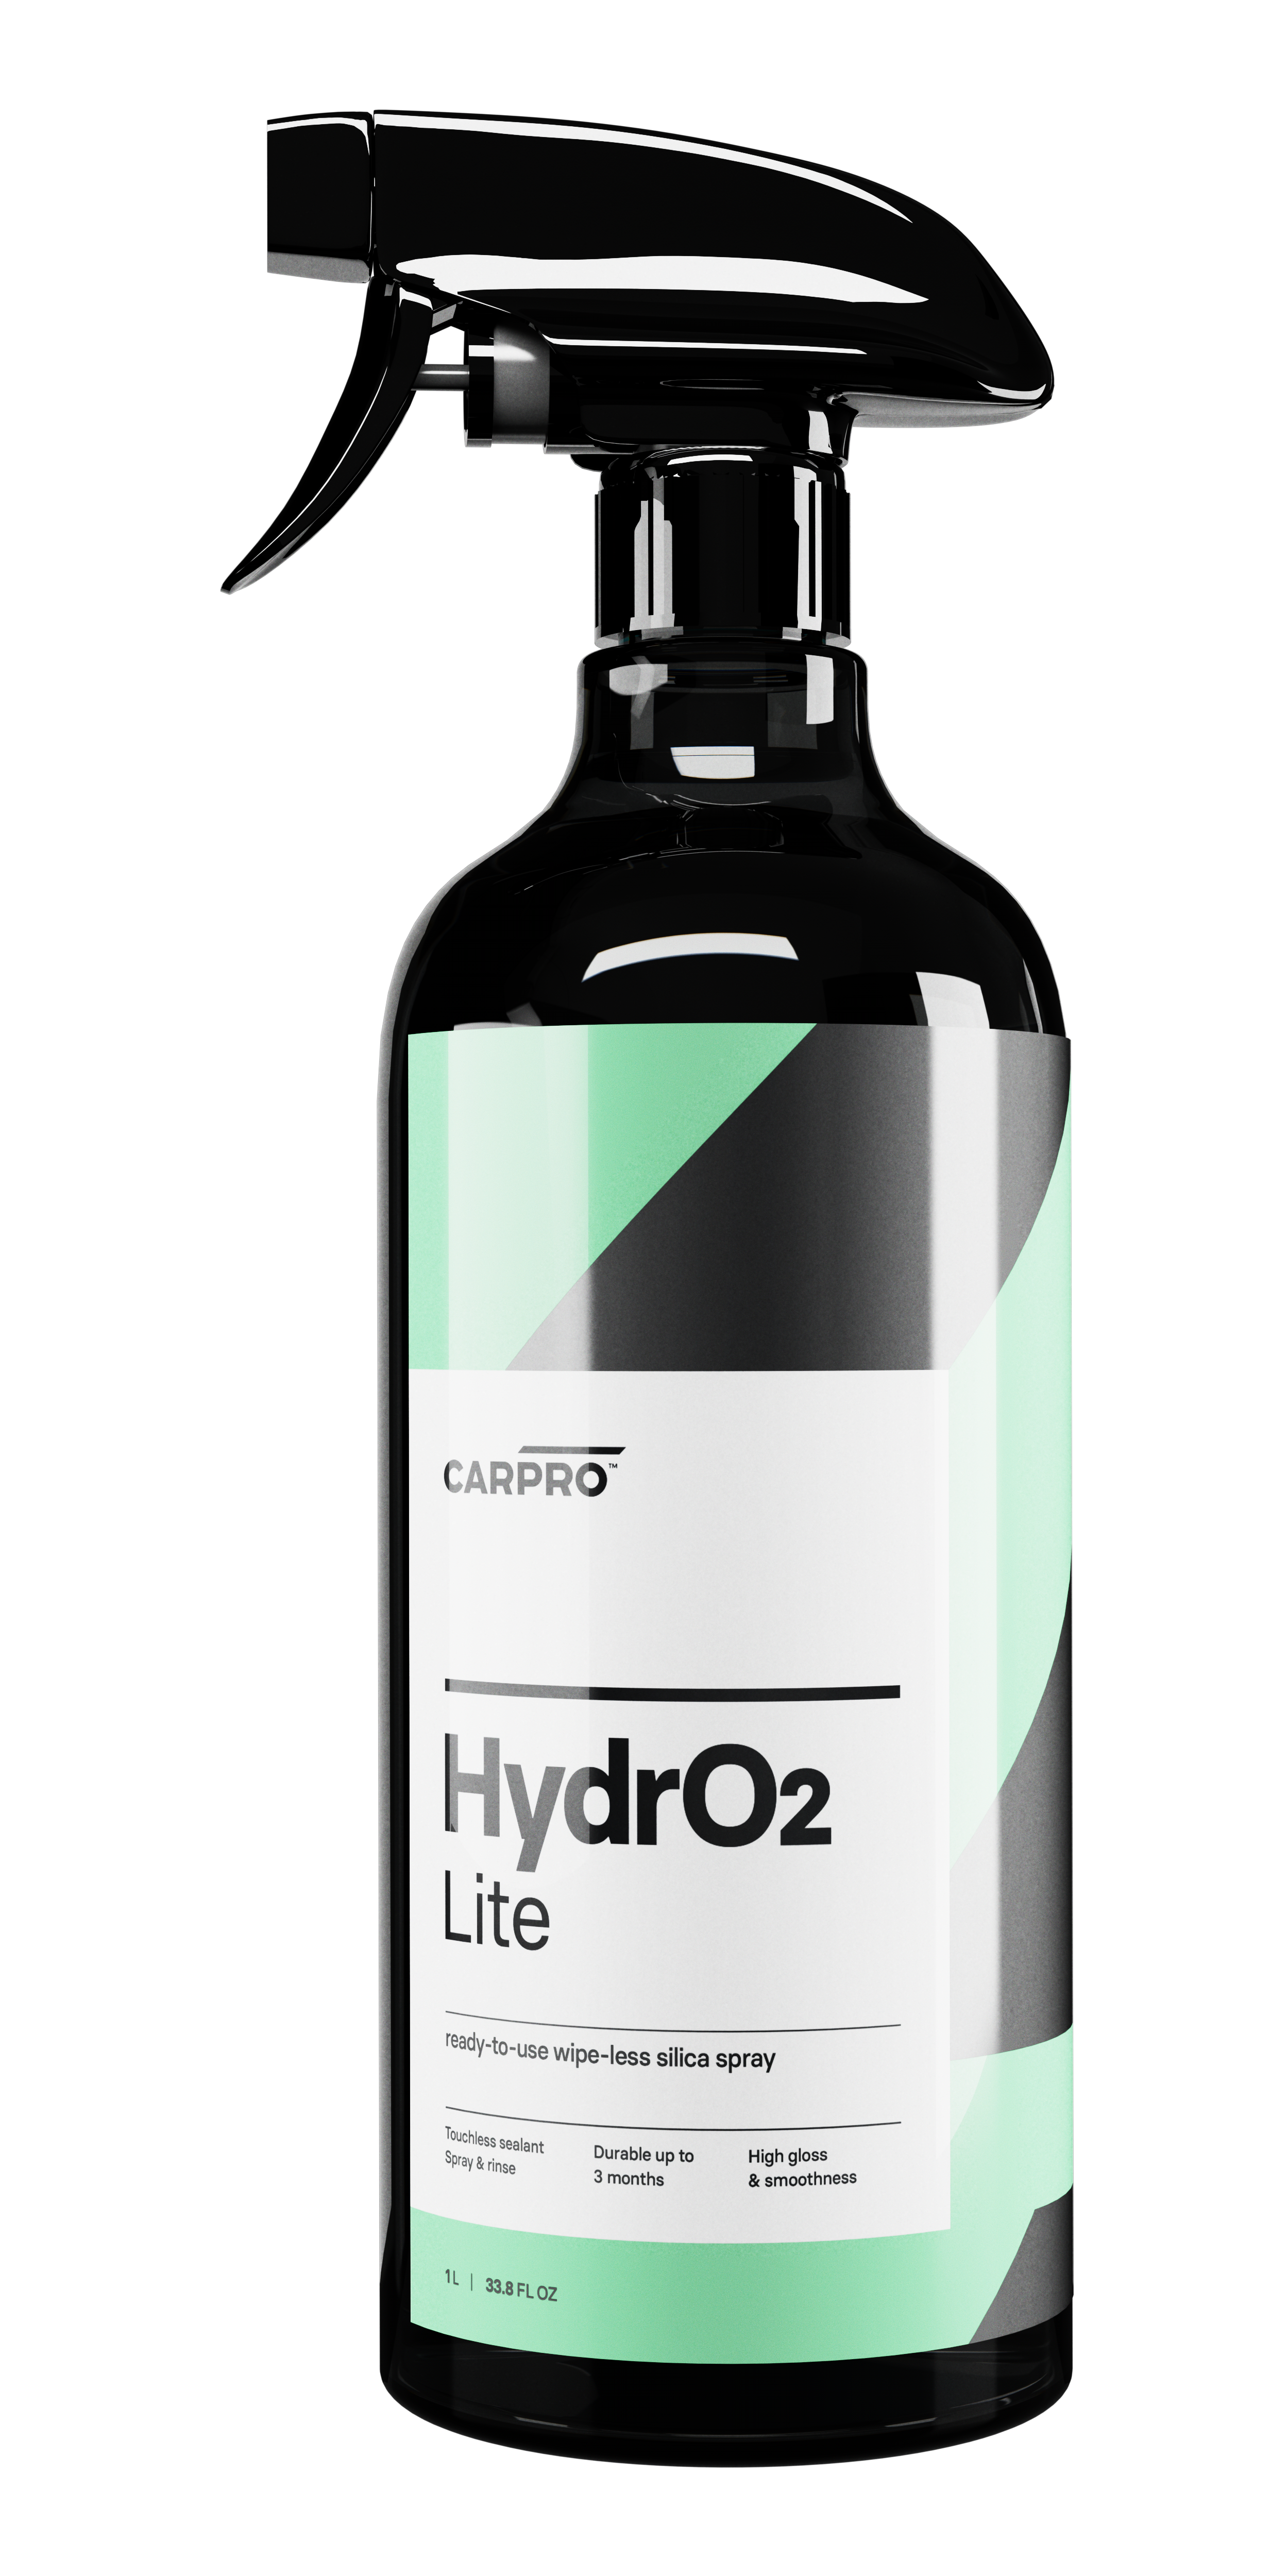 CARPRO - HydrO2 Lite 1L (Ready-to-use SiO2-based sealant)